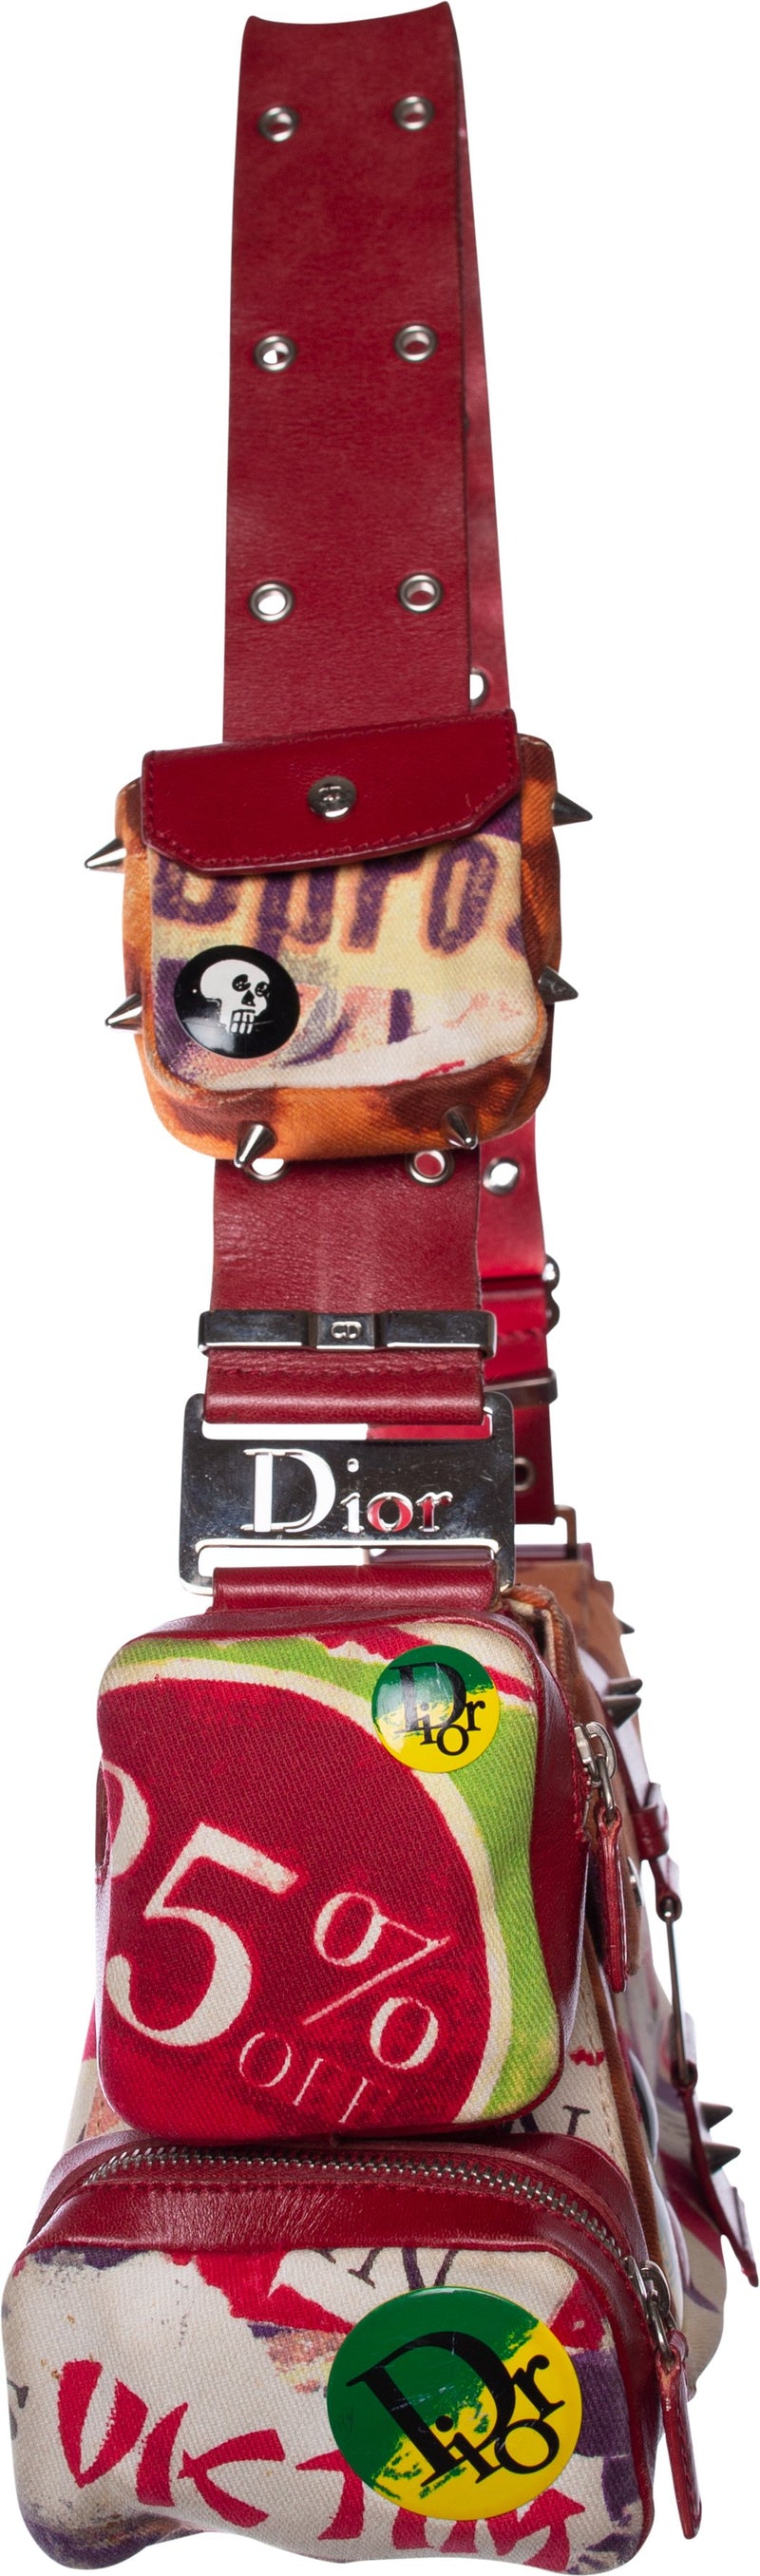 Christian Dior Limited Edition Columbus Bag